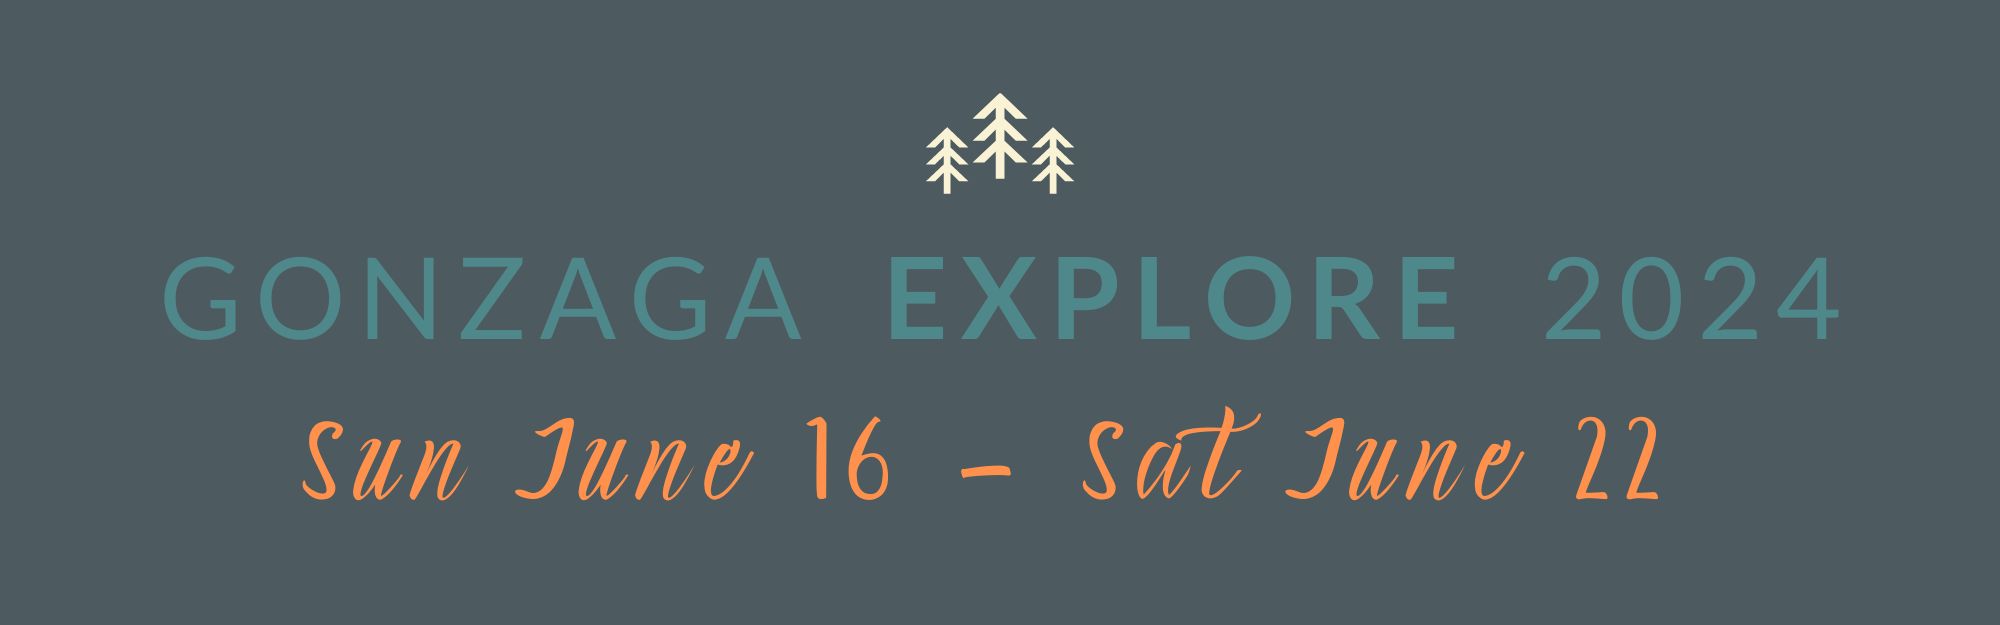 Gonzaga Explore 2023 June 19 - 24